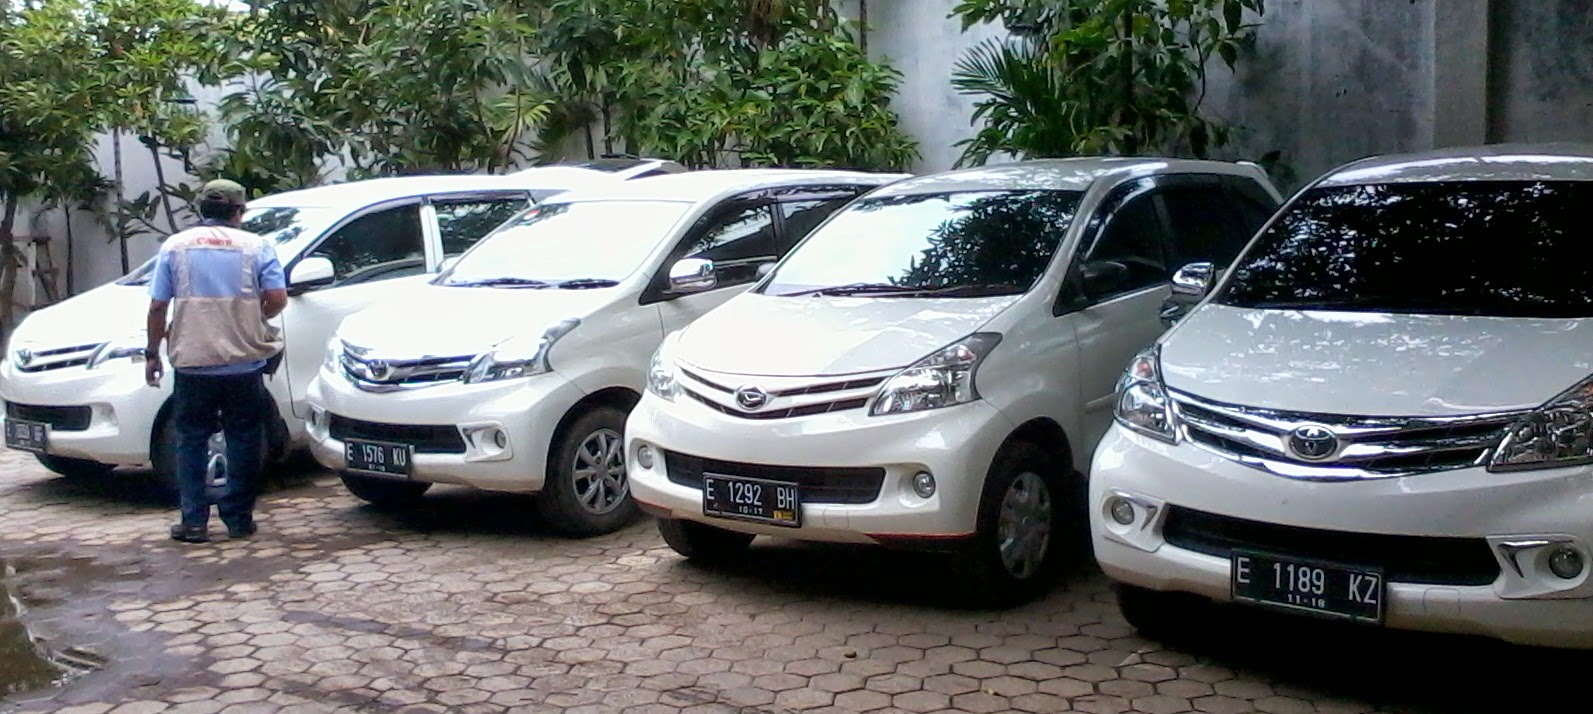 Harga Baru  Biaya Sewa Mobil  Cirebon  Syifa Rental Sewa 